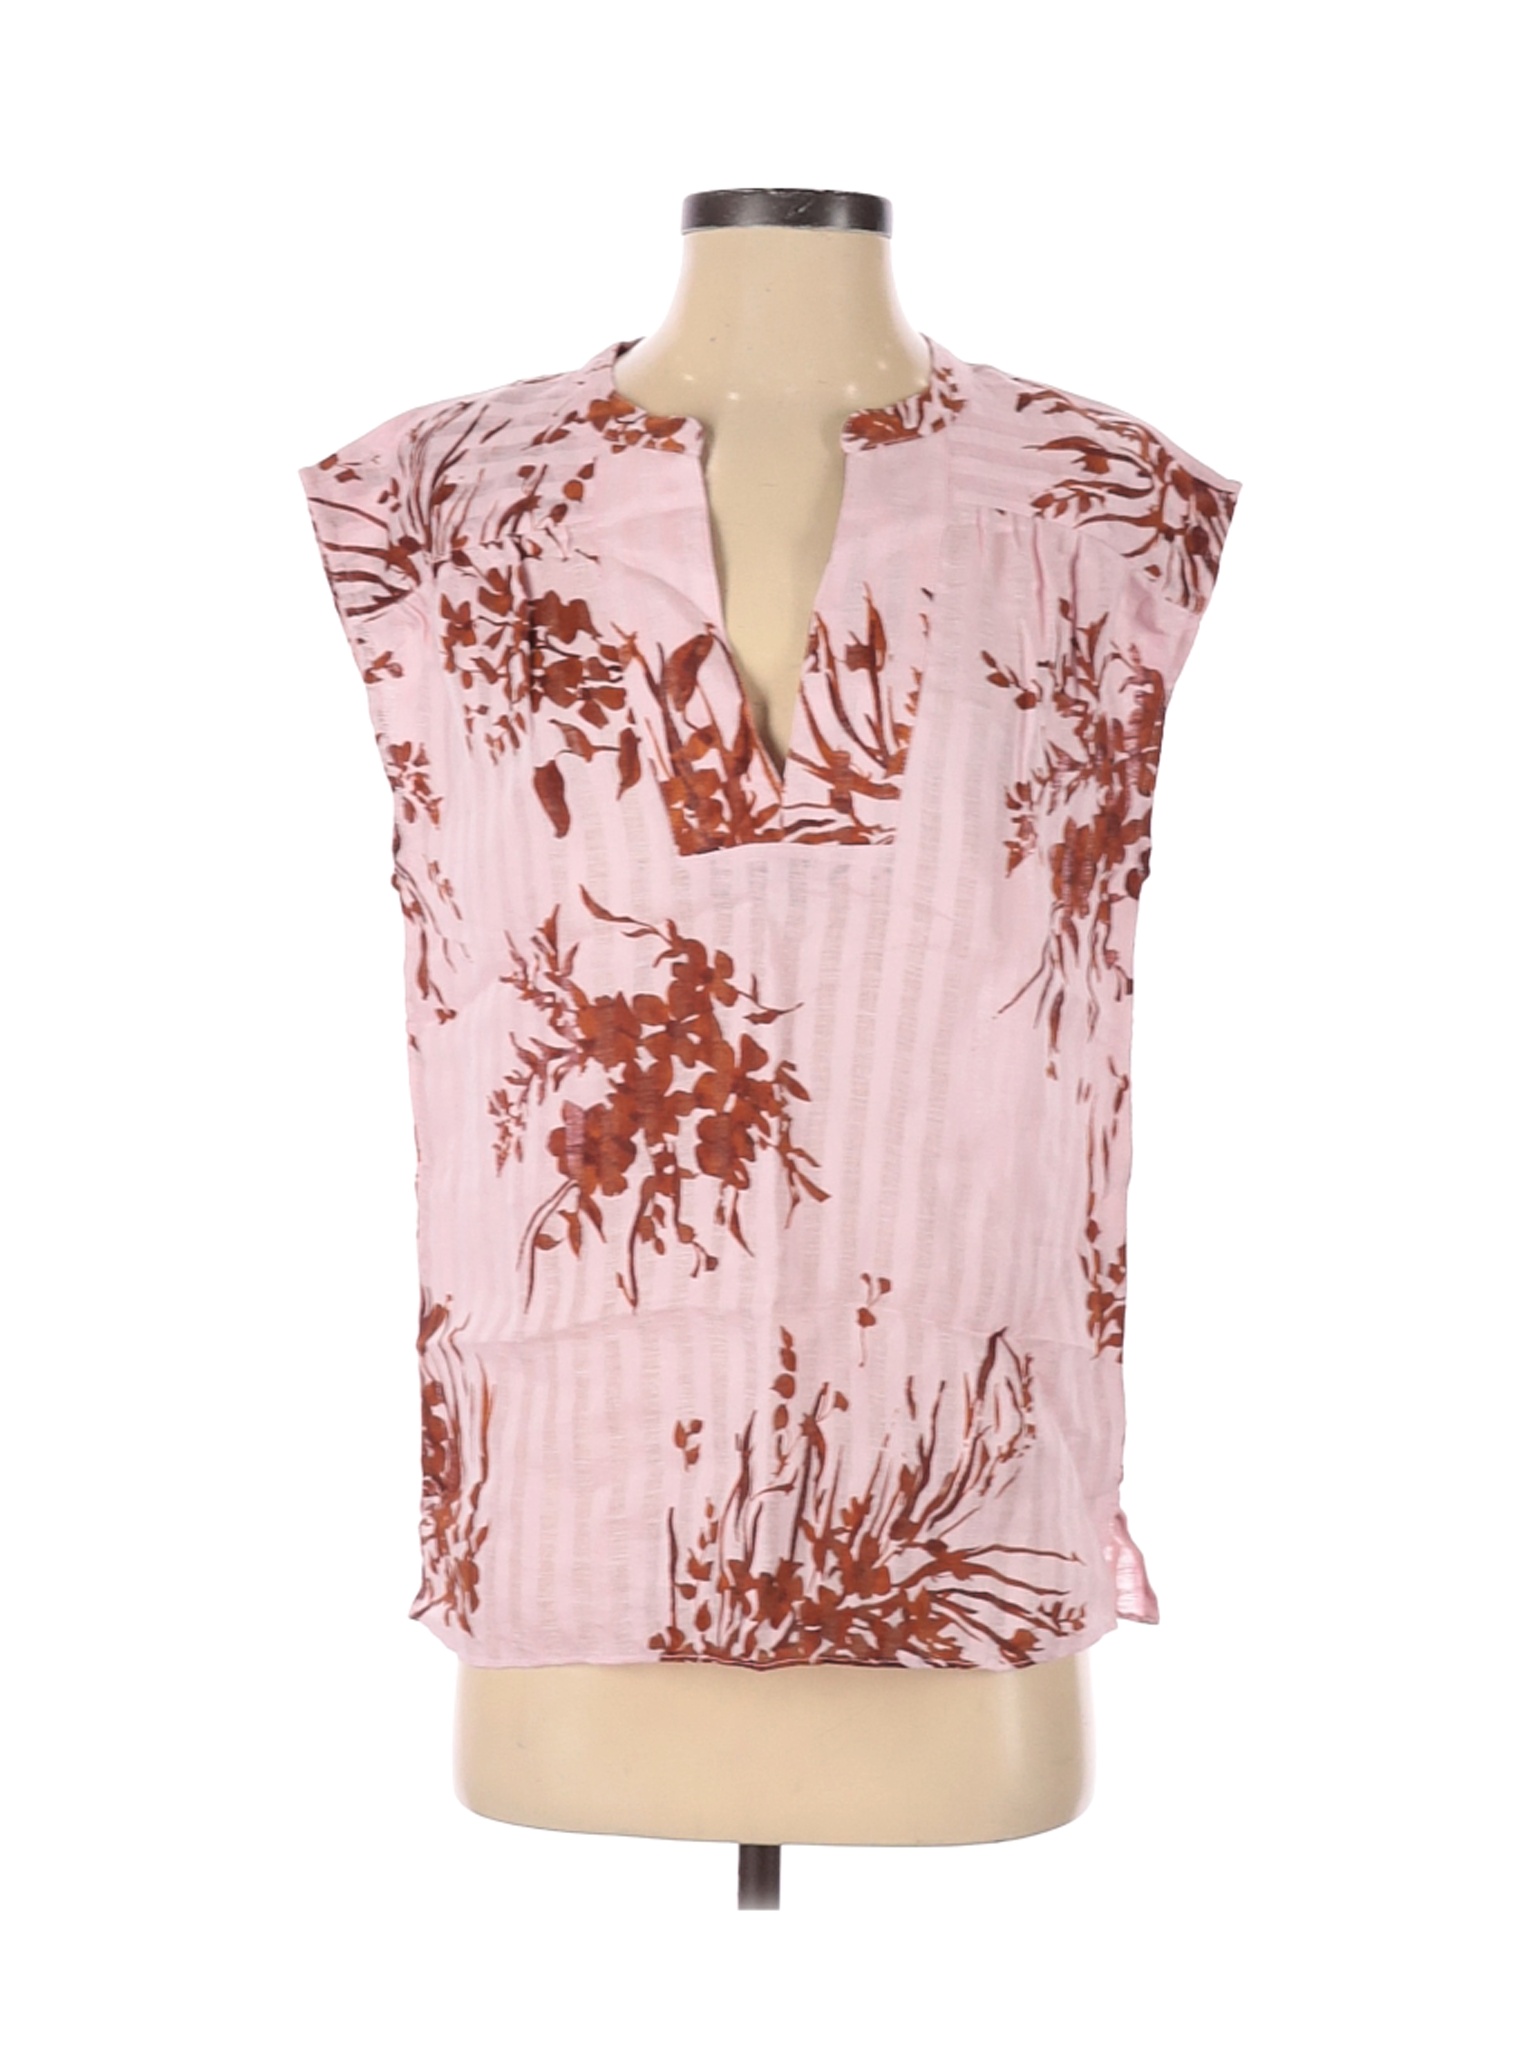 NWT Joie Women Pink Short Sleeve Blouse XS | eBay